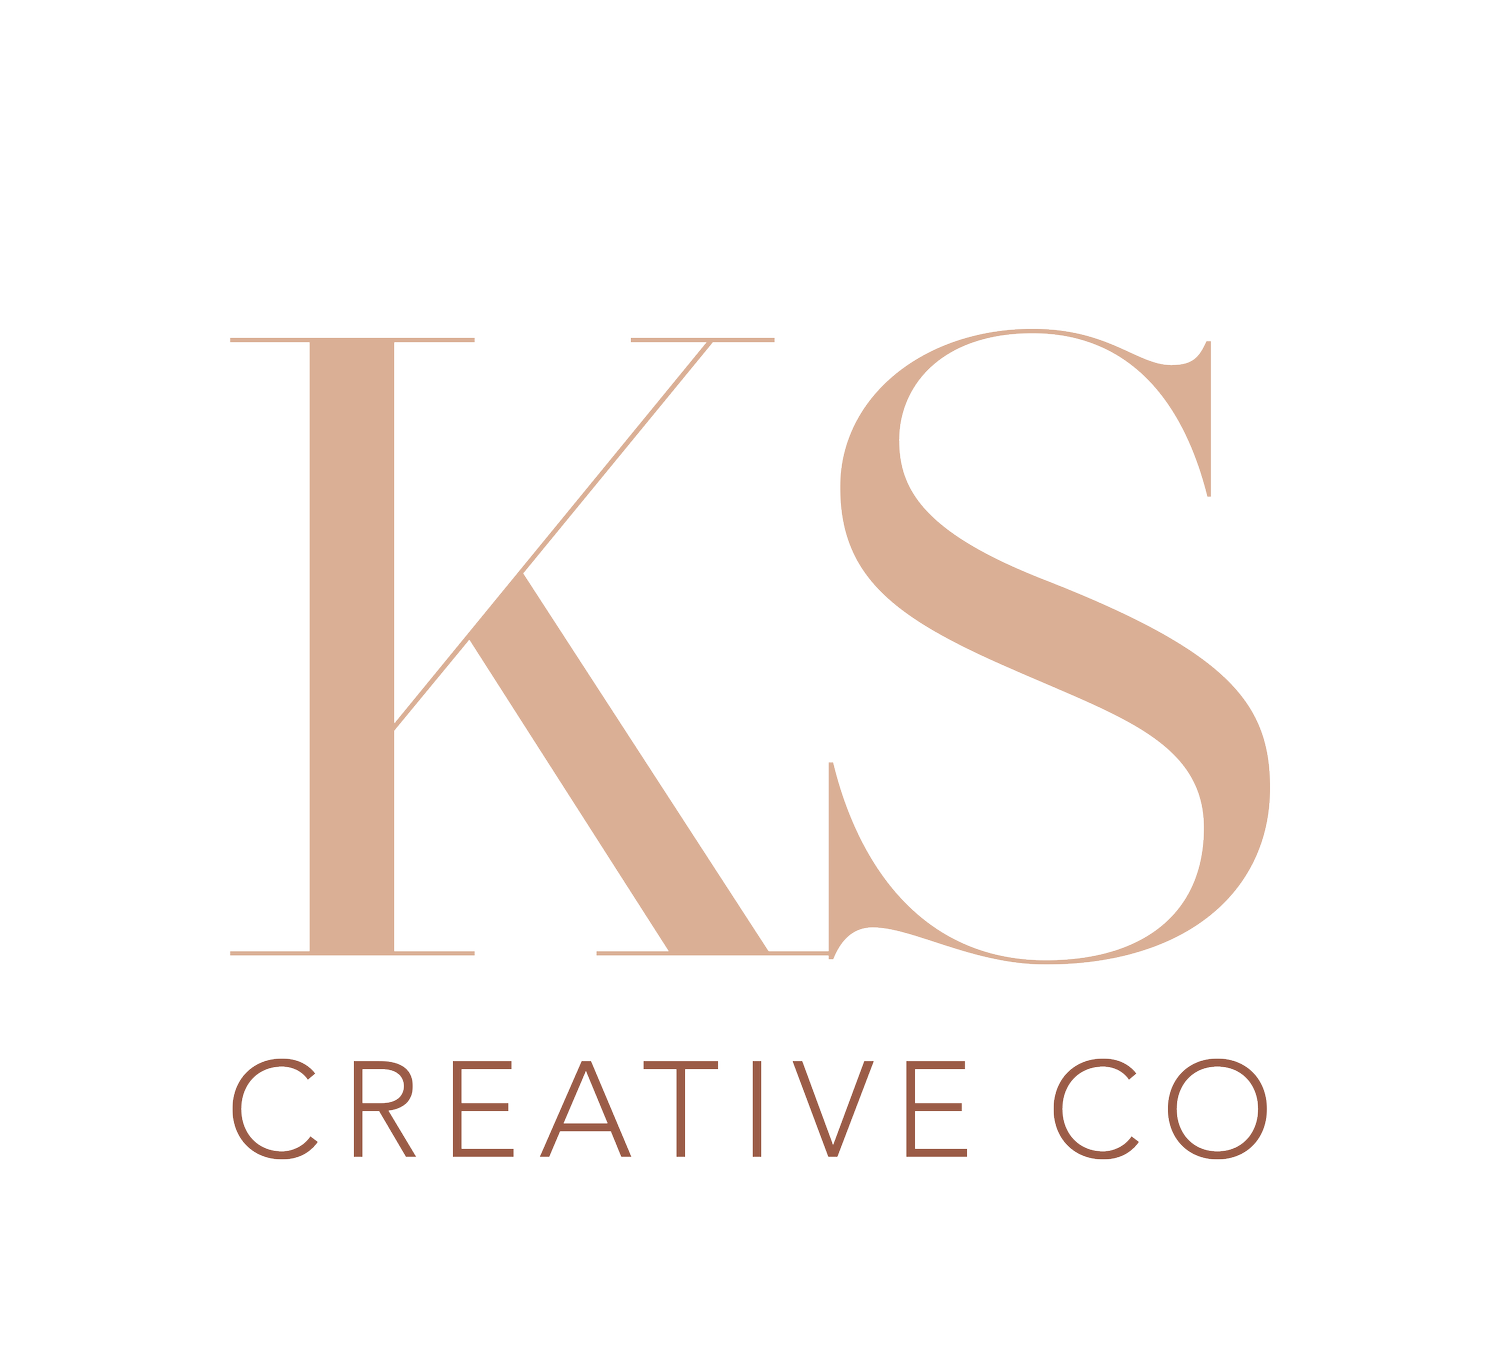 KS Creative Co